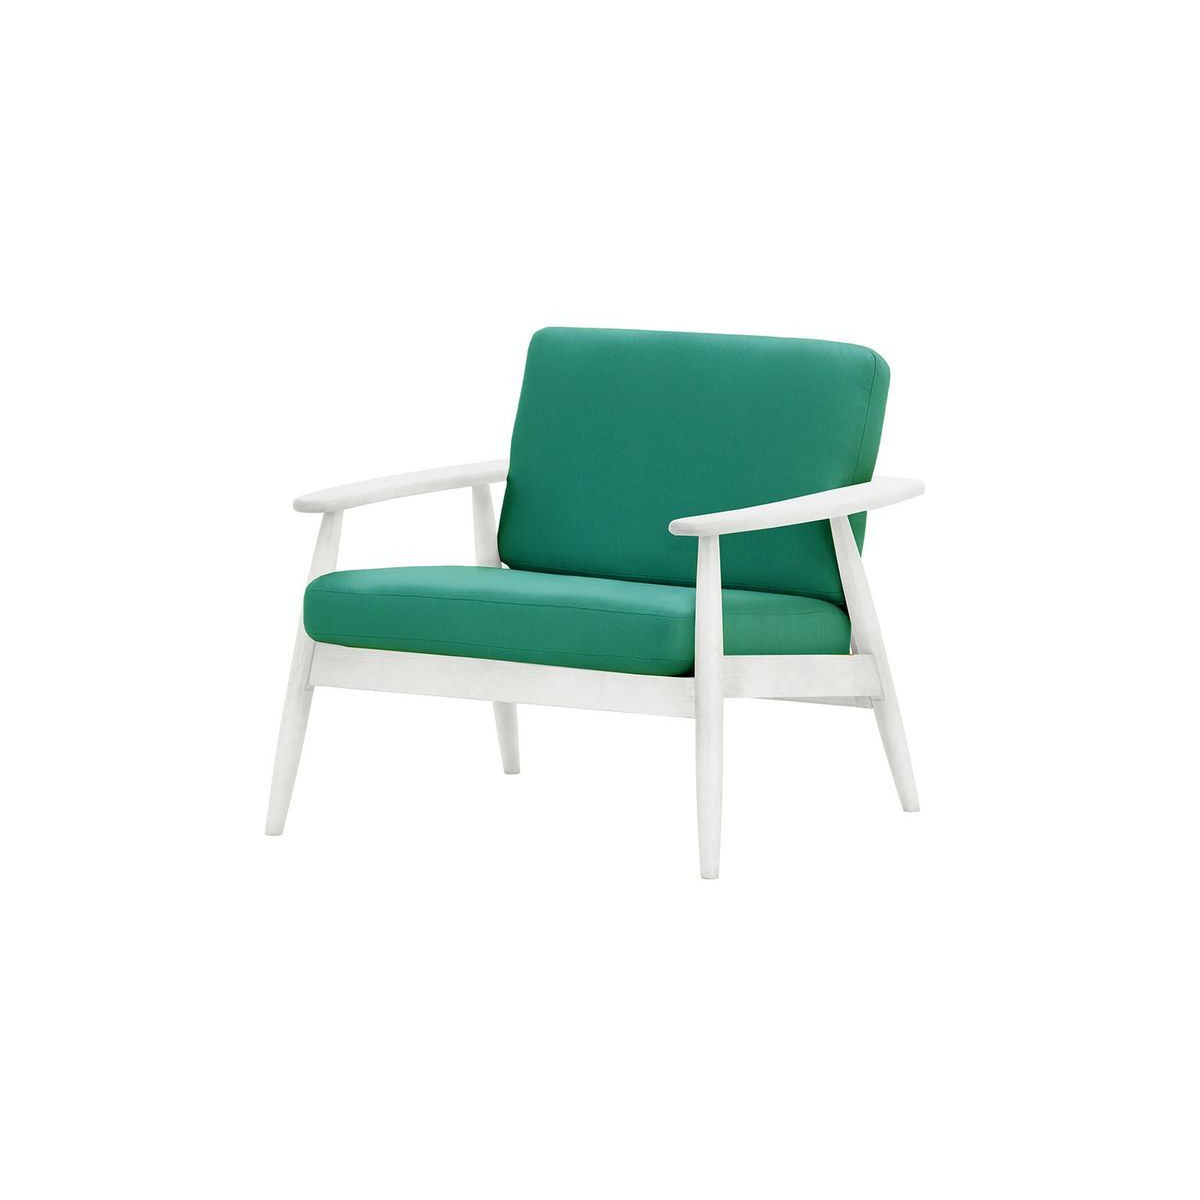 Demure Aqua Garden Armchair, turquoise, Leg colour: 8035 white - image 1